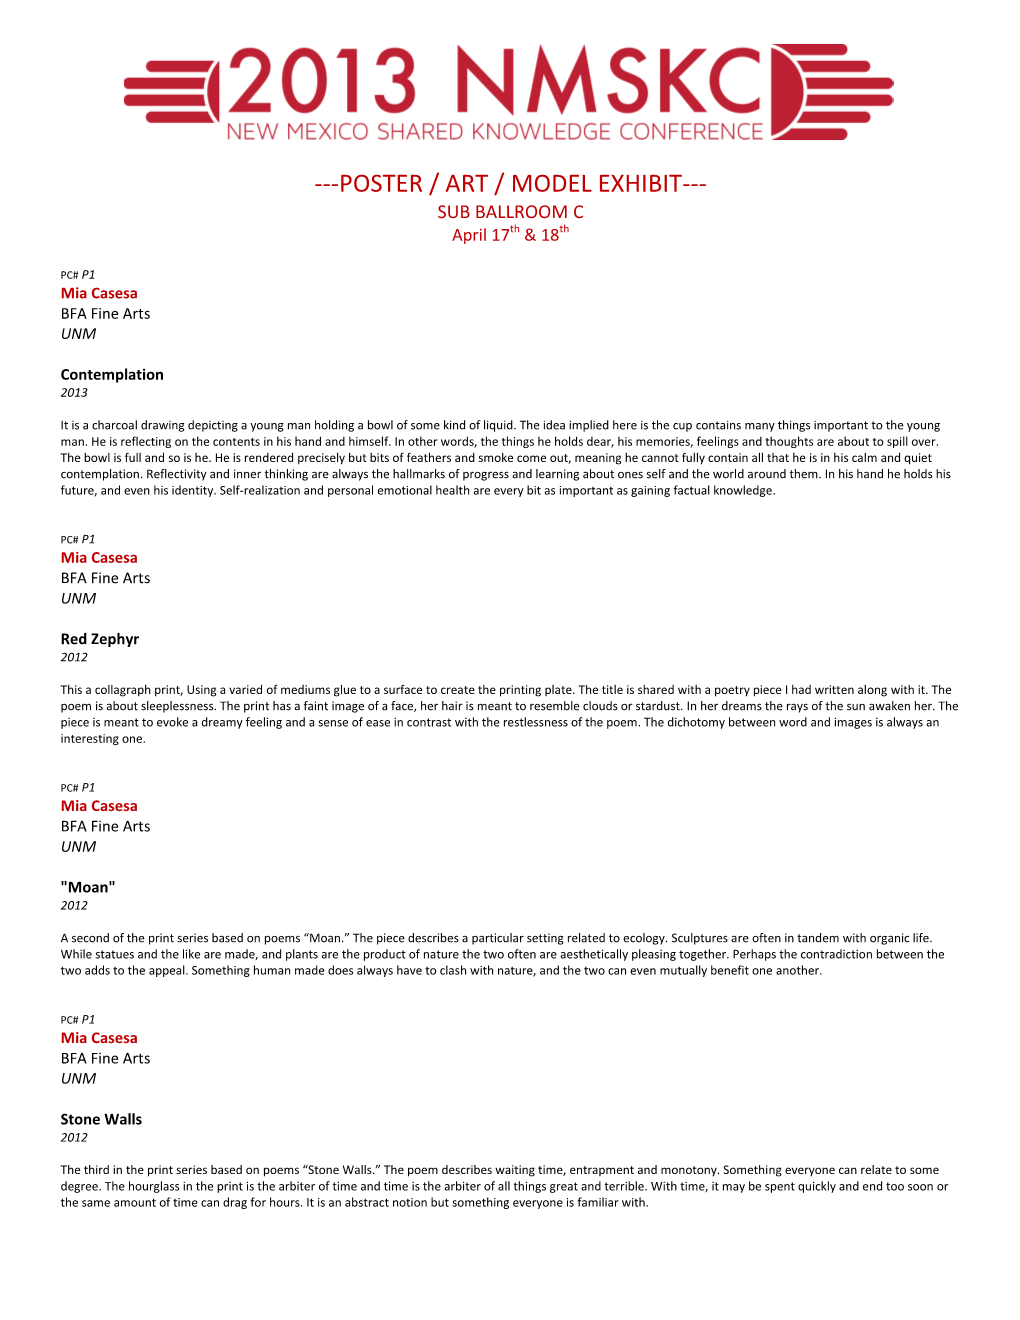 POSTER / ART / MODEL EXHIBIT--- SUB BALLROOM C April 17Th & 18Th